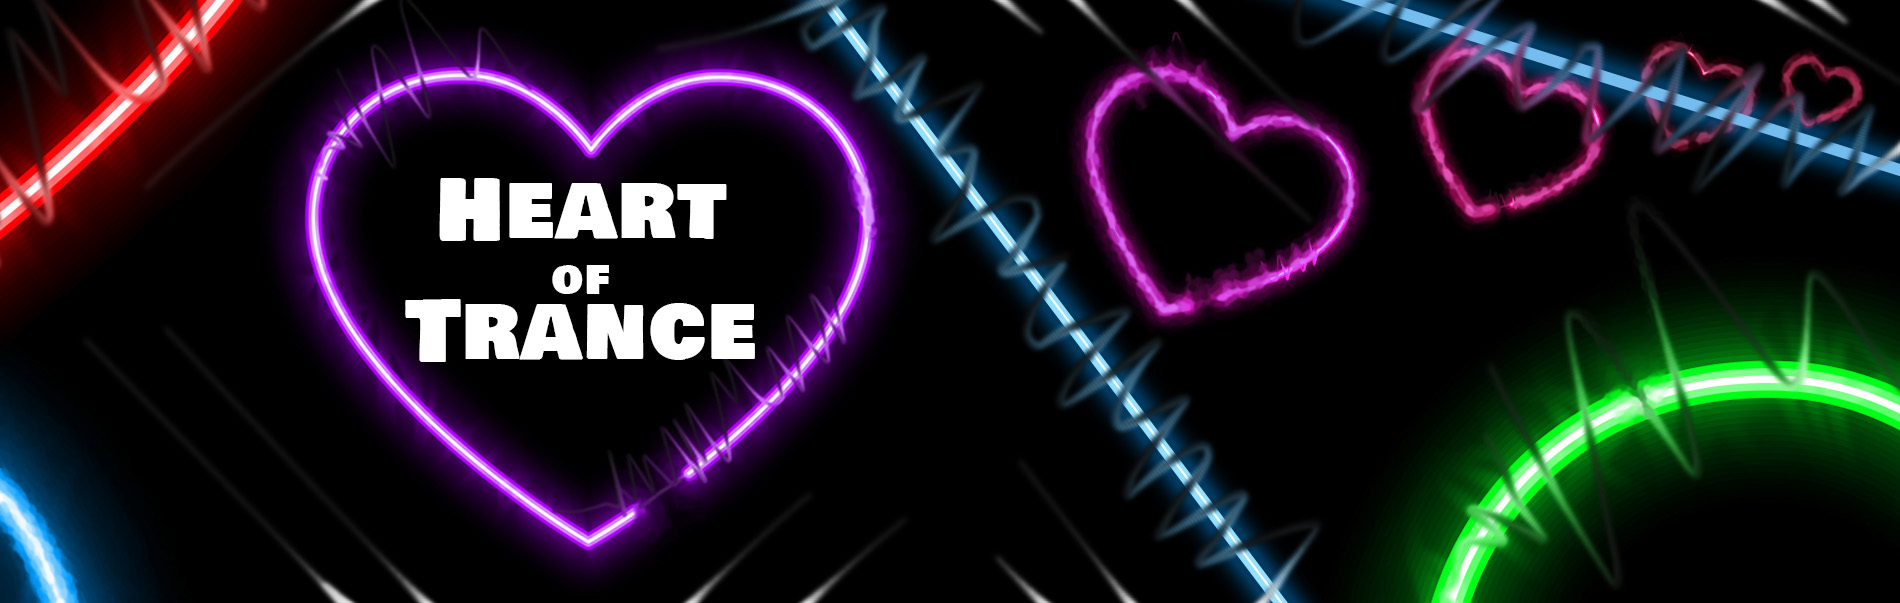 header logo heart of trance